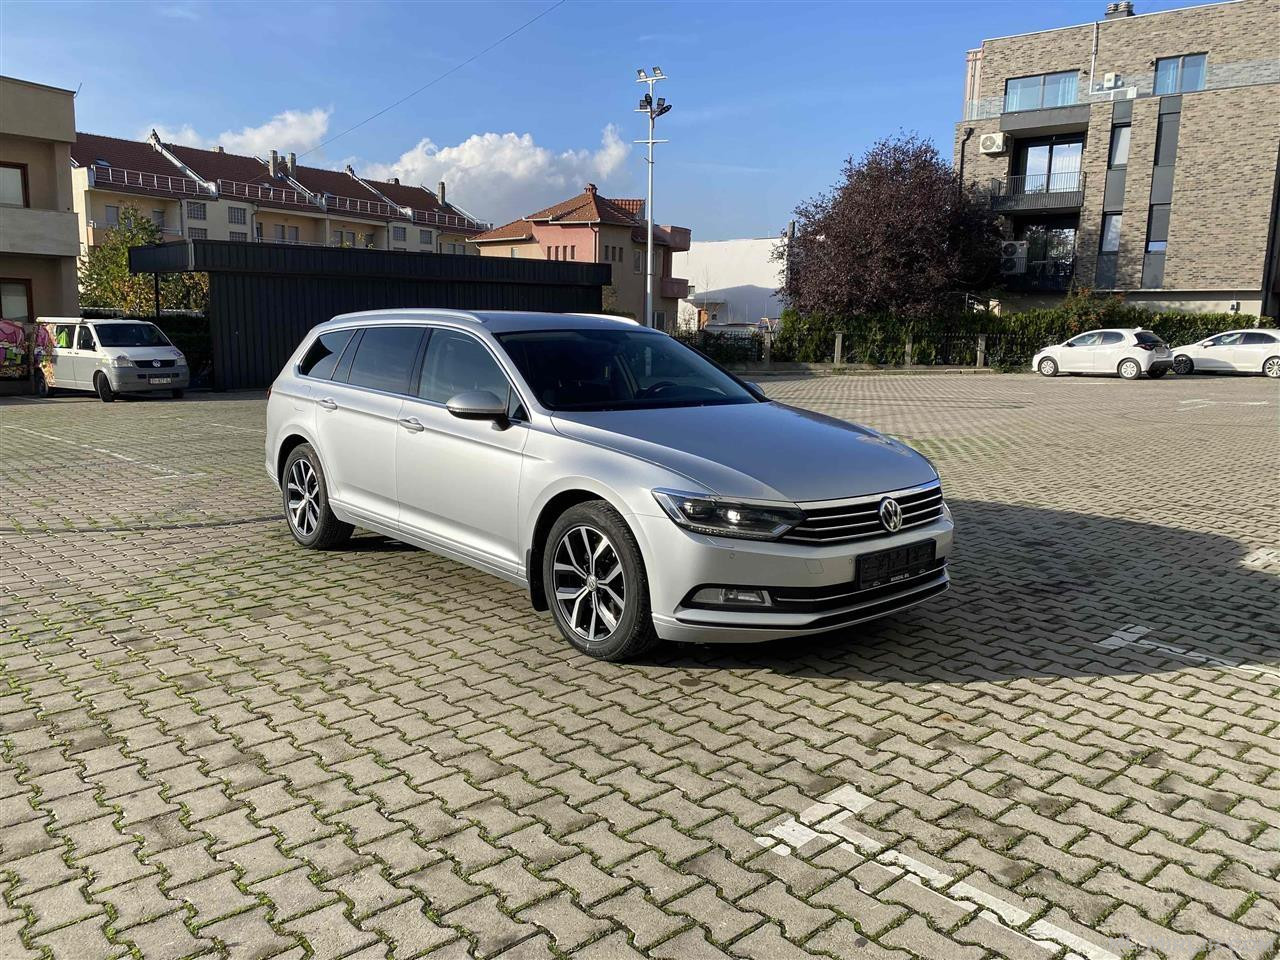 VW Passat B8 2019 DSG